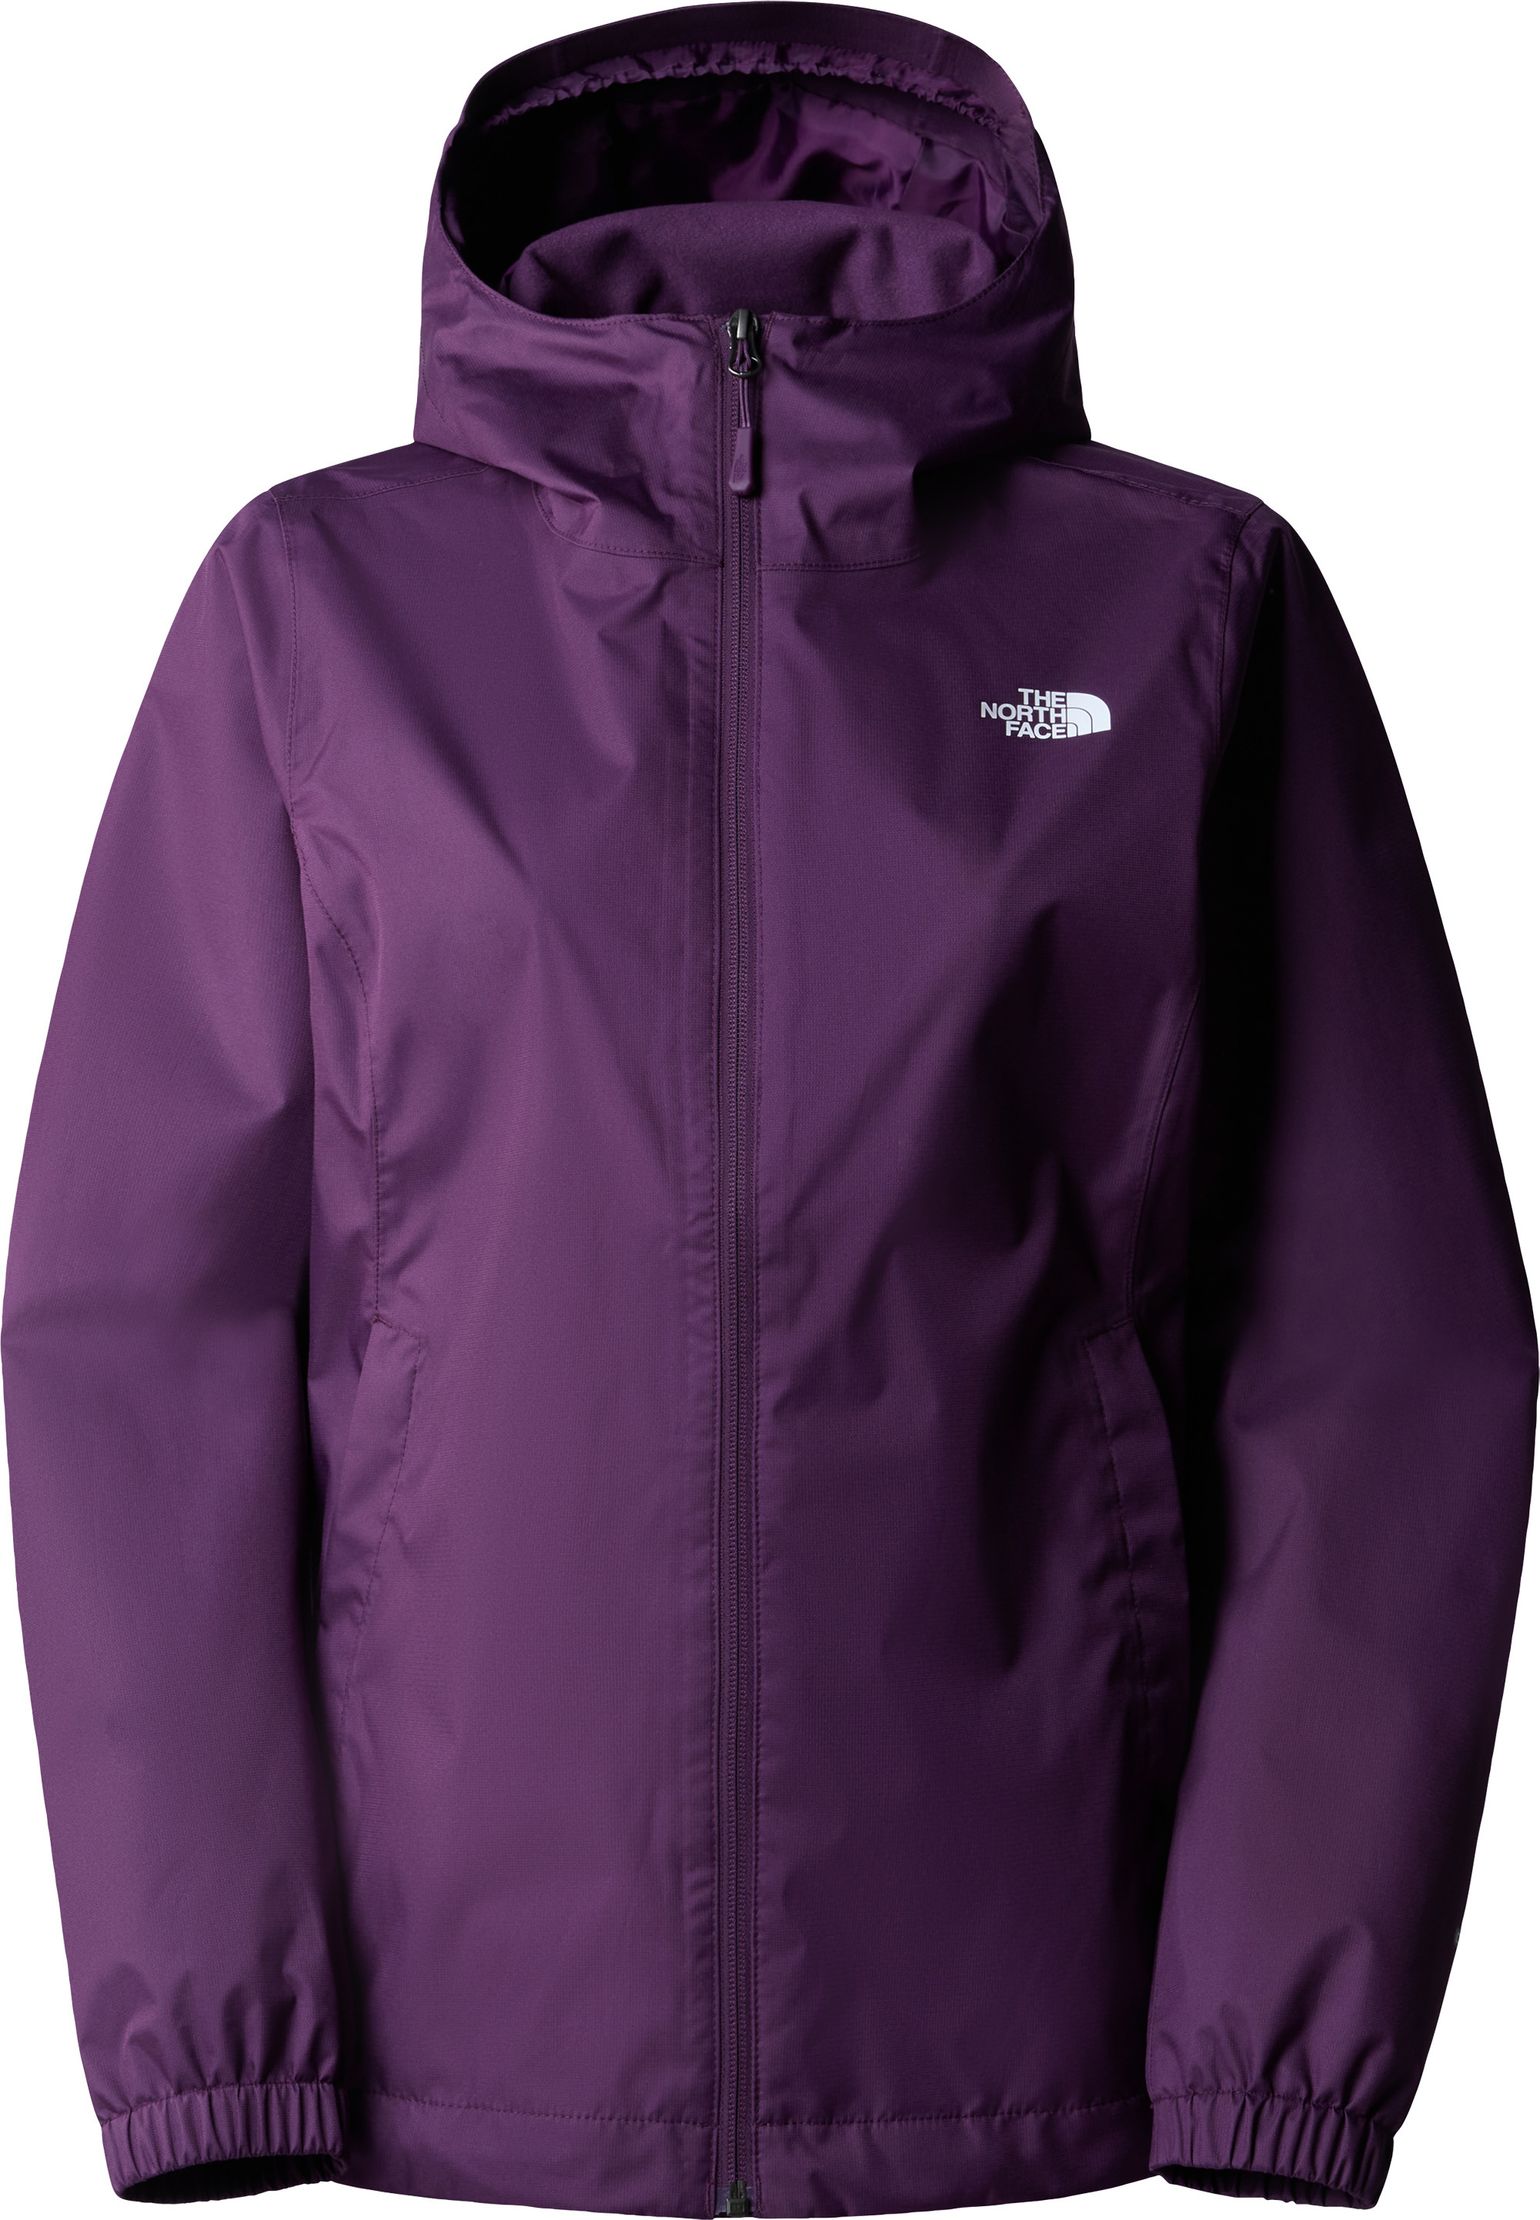 The North Face Women's Quest Jacket Black Currant Purple